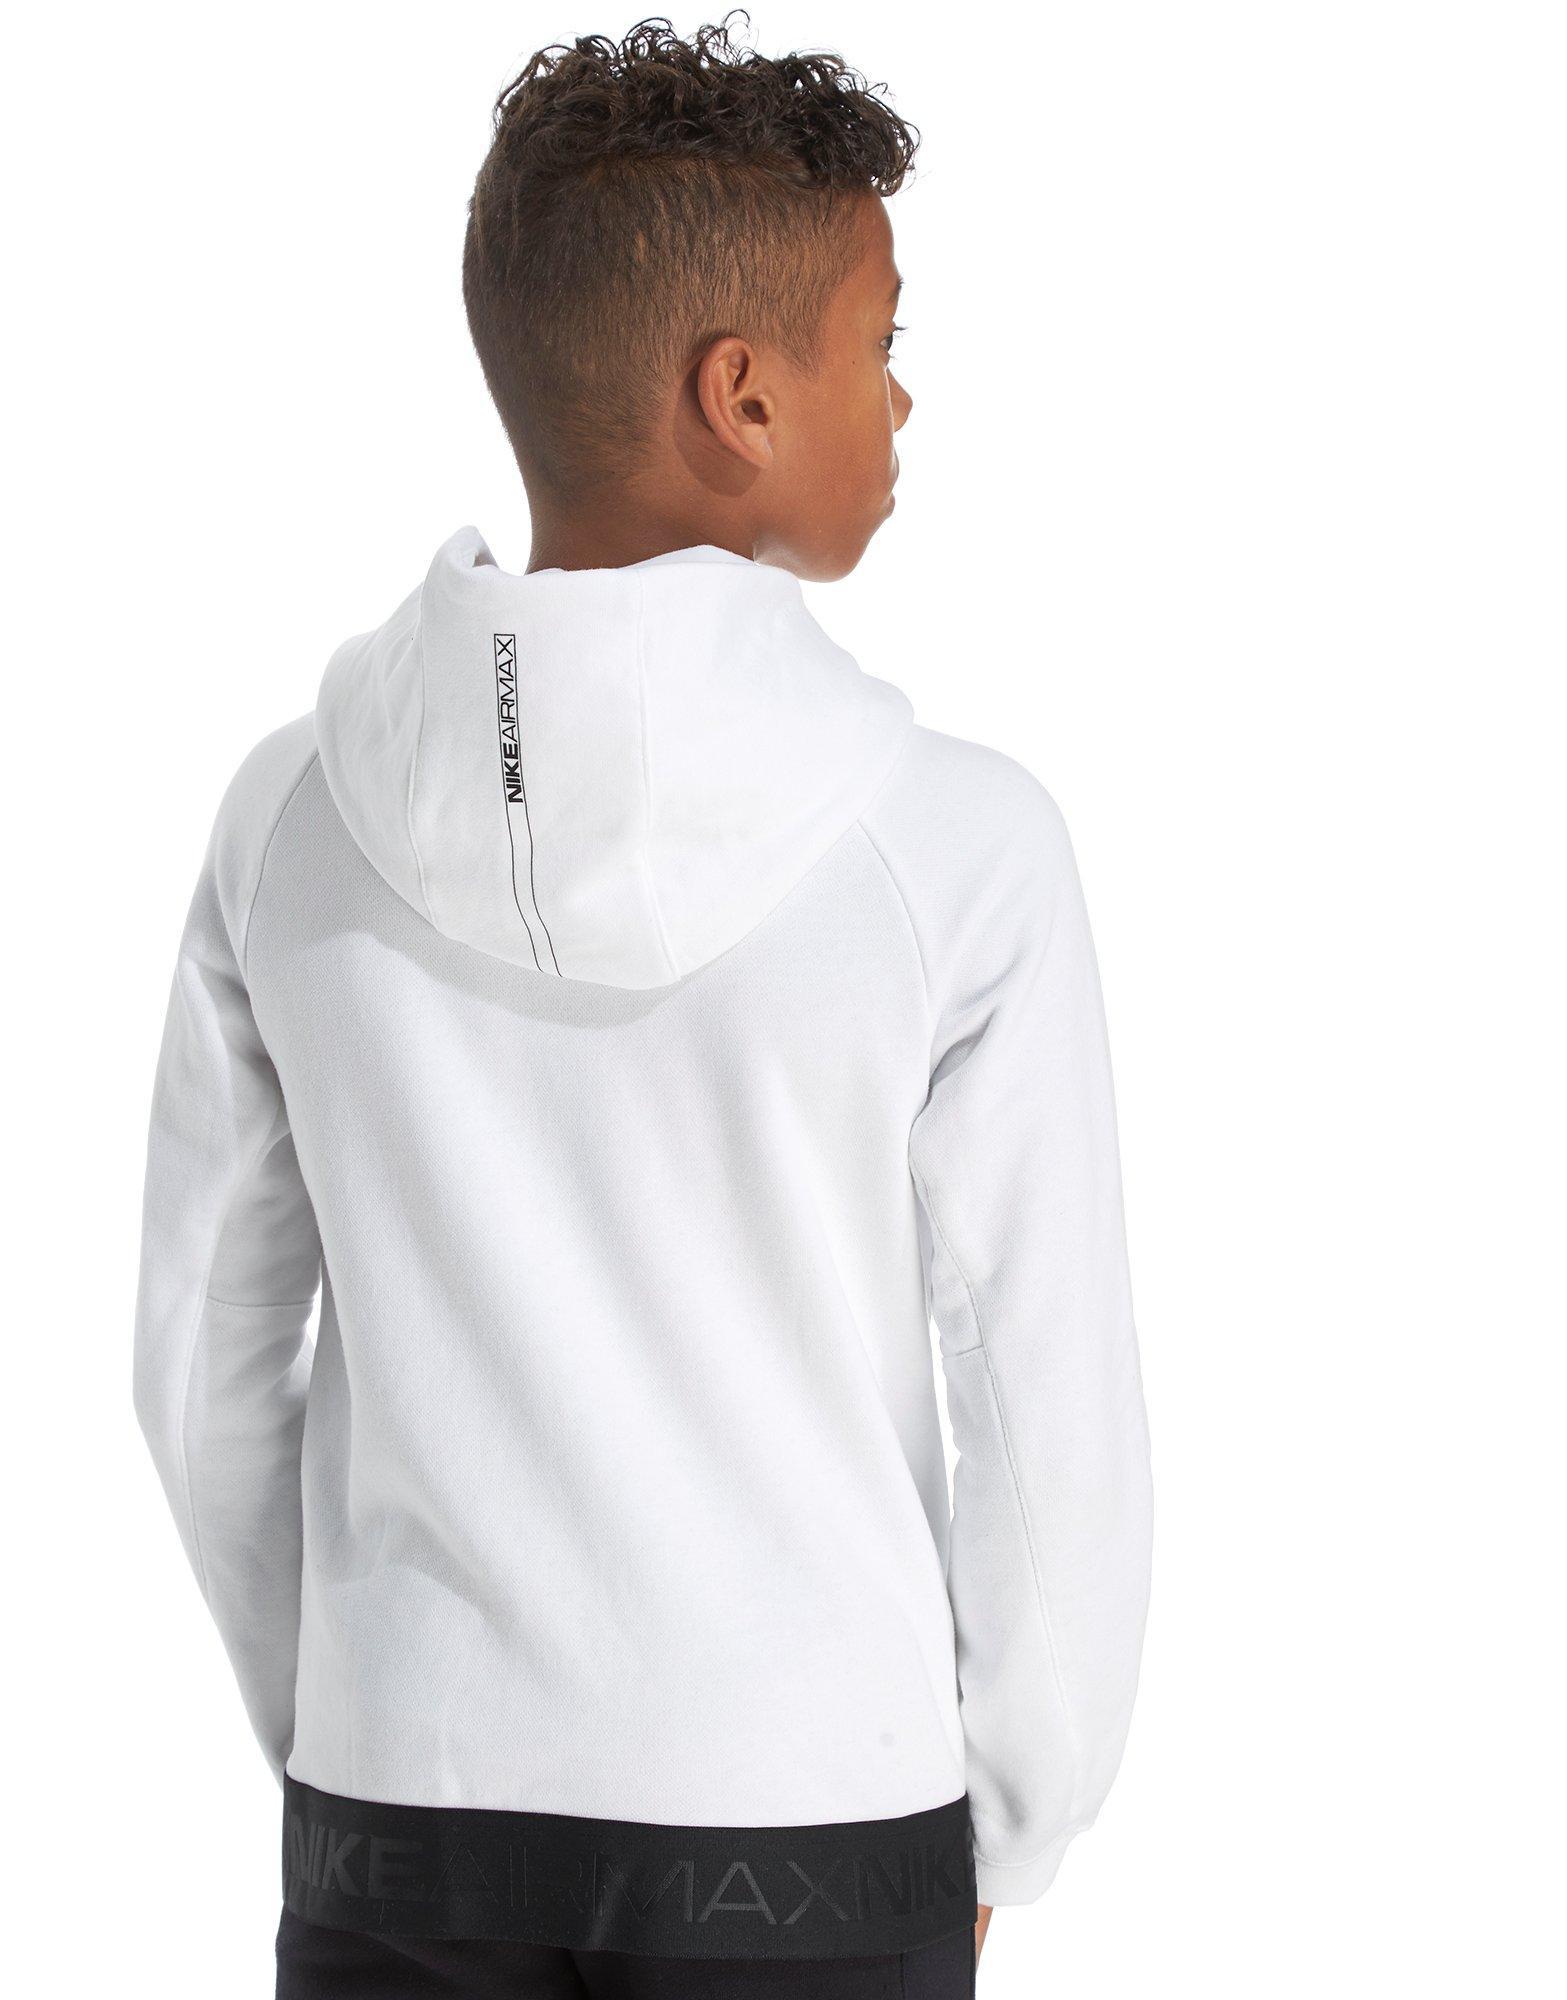  Nike  Cotton Air  Max Hoodie  Junior in White  Black White  